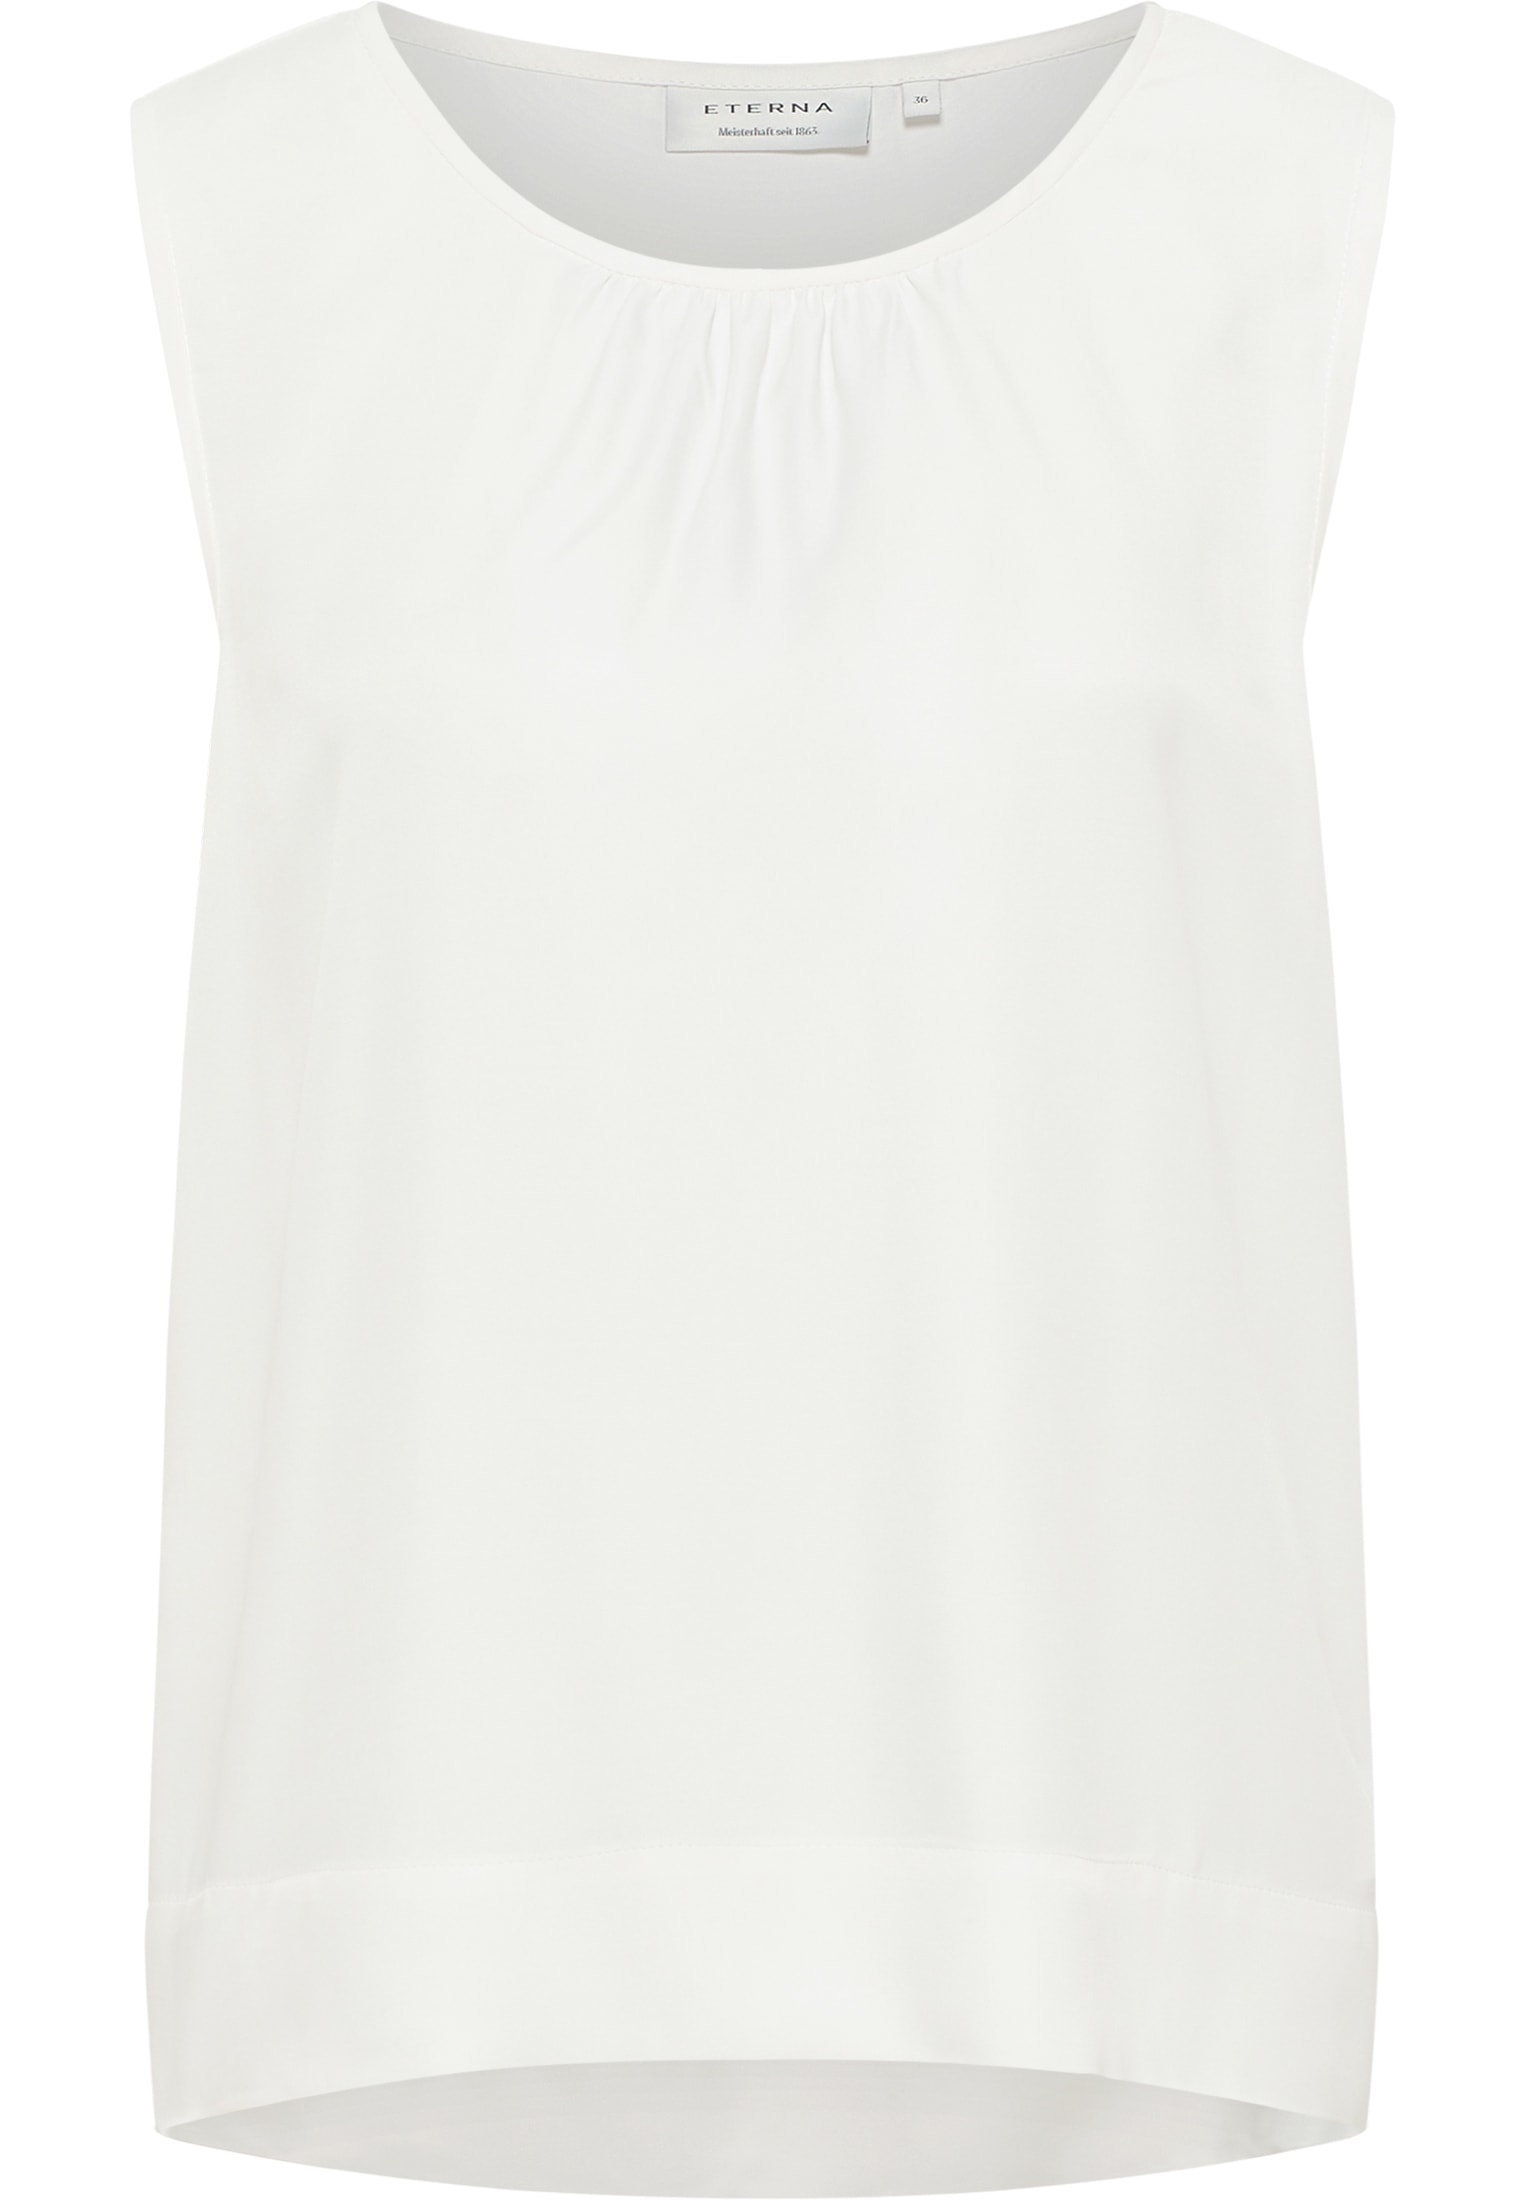 Viscose off-white | 36 off-white Bluse | in unifarben Arm | Shirt ohne 2BL04345-00-02-36-sl |